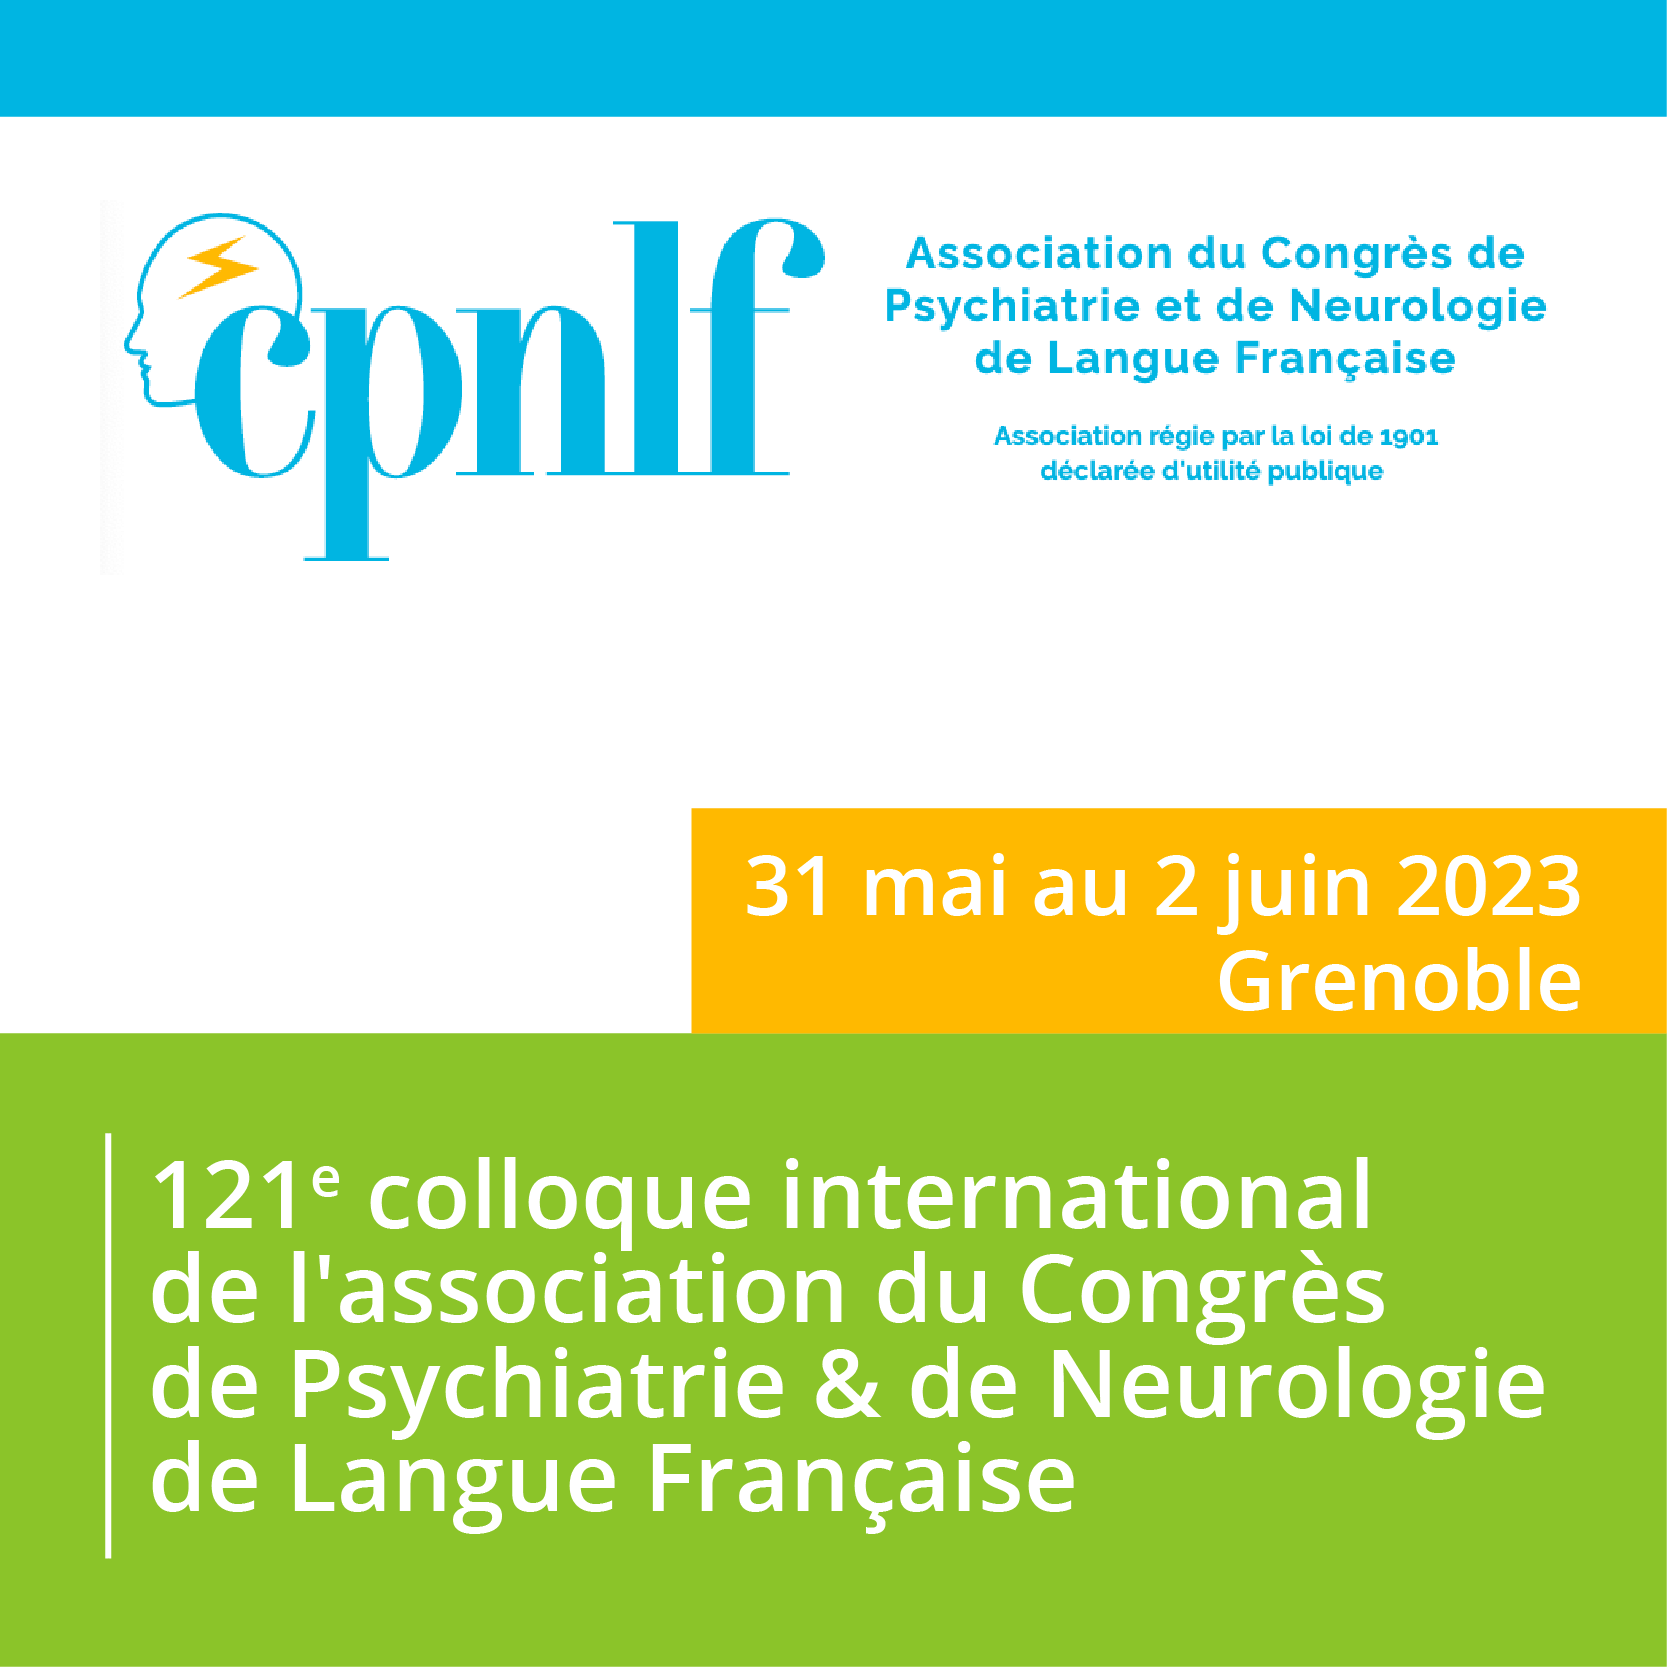 121e colloque international de l'association du Congrès de Psychiatrie & de Neurologie de Langue Française - CPNLF 2023